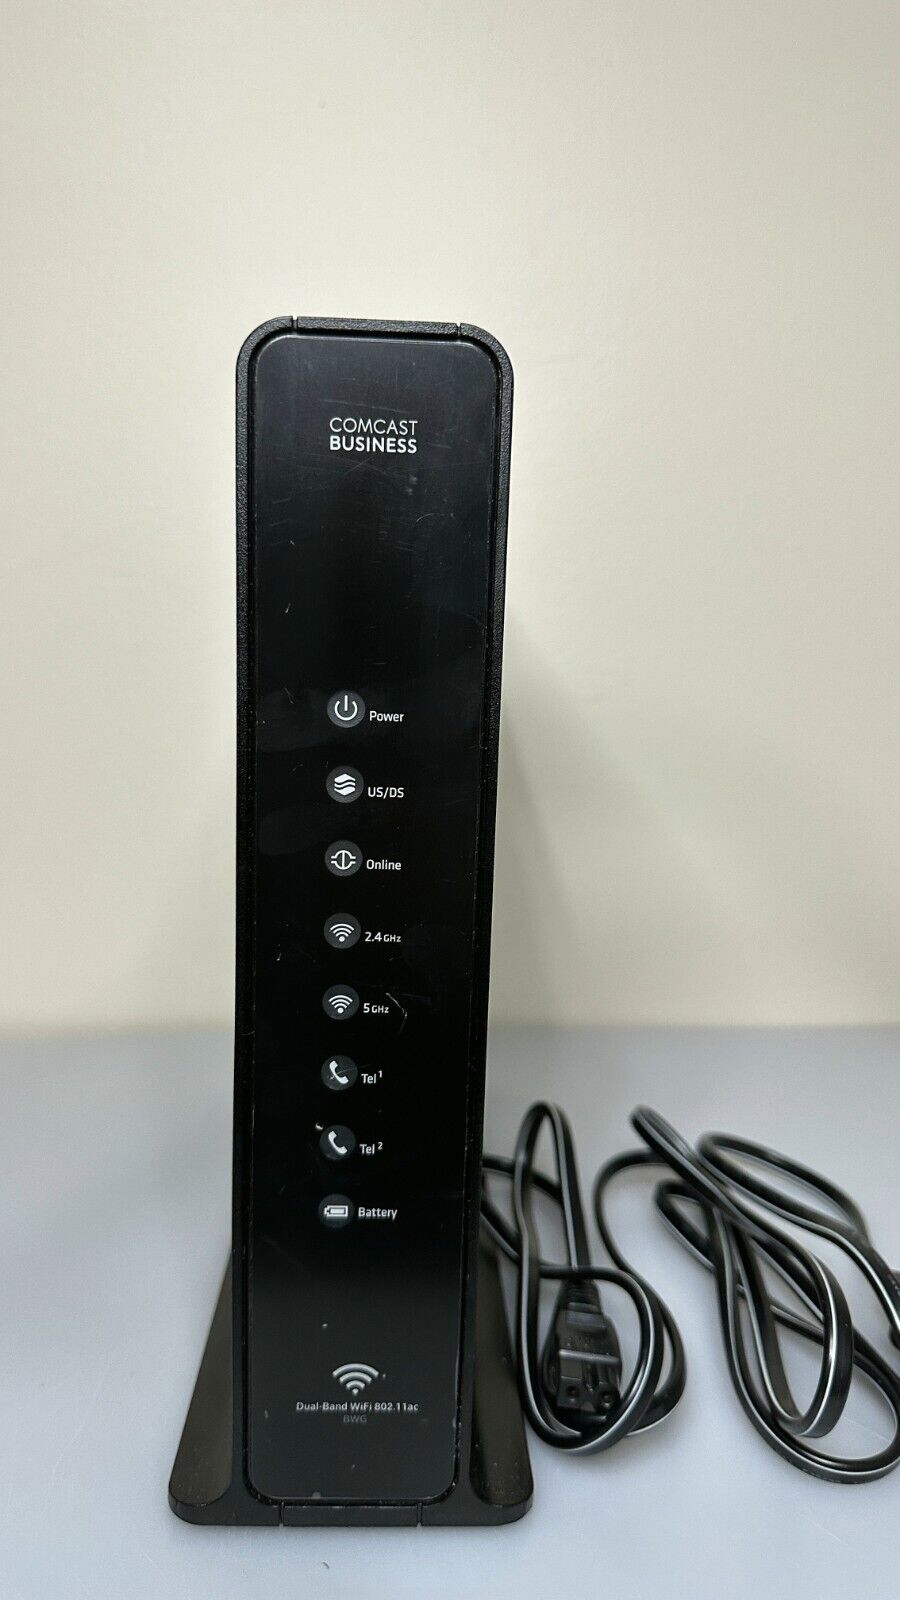 Cisco Comcast Business Cable Model Dual-Band WiFi Modem DPC3941T